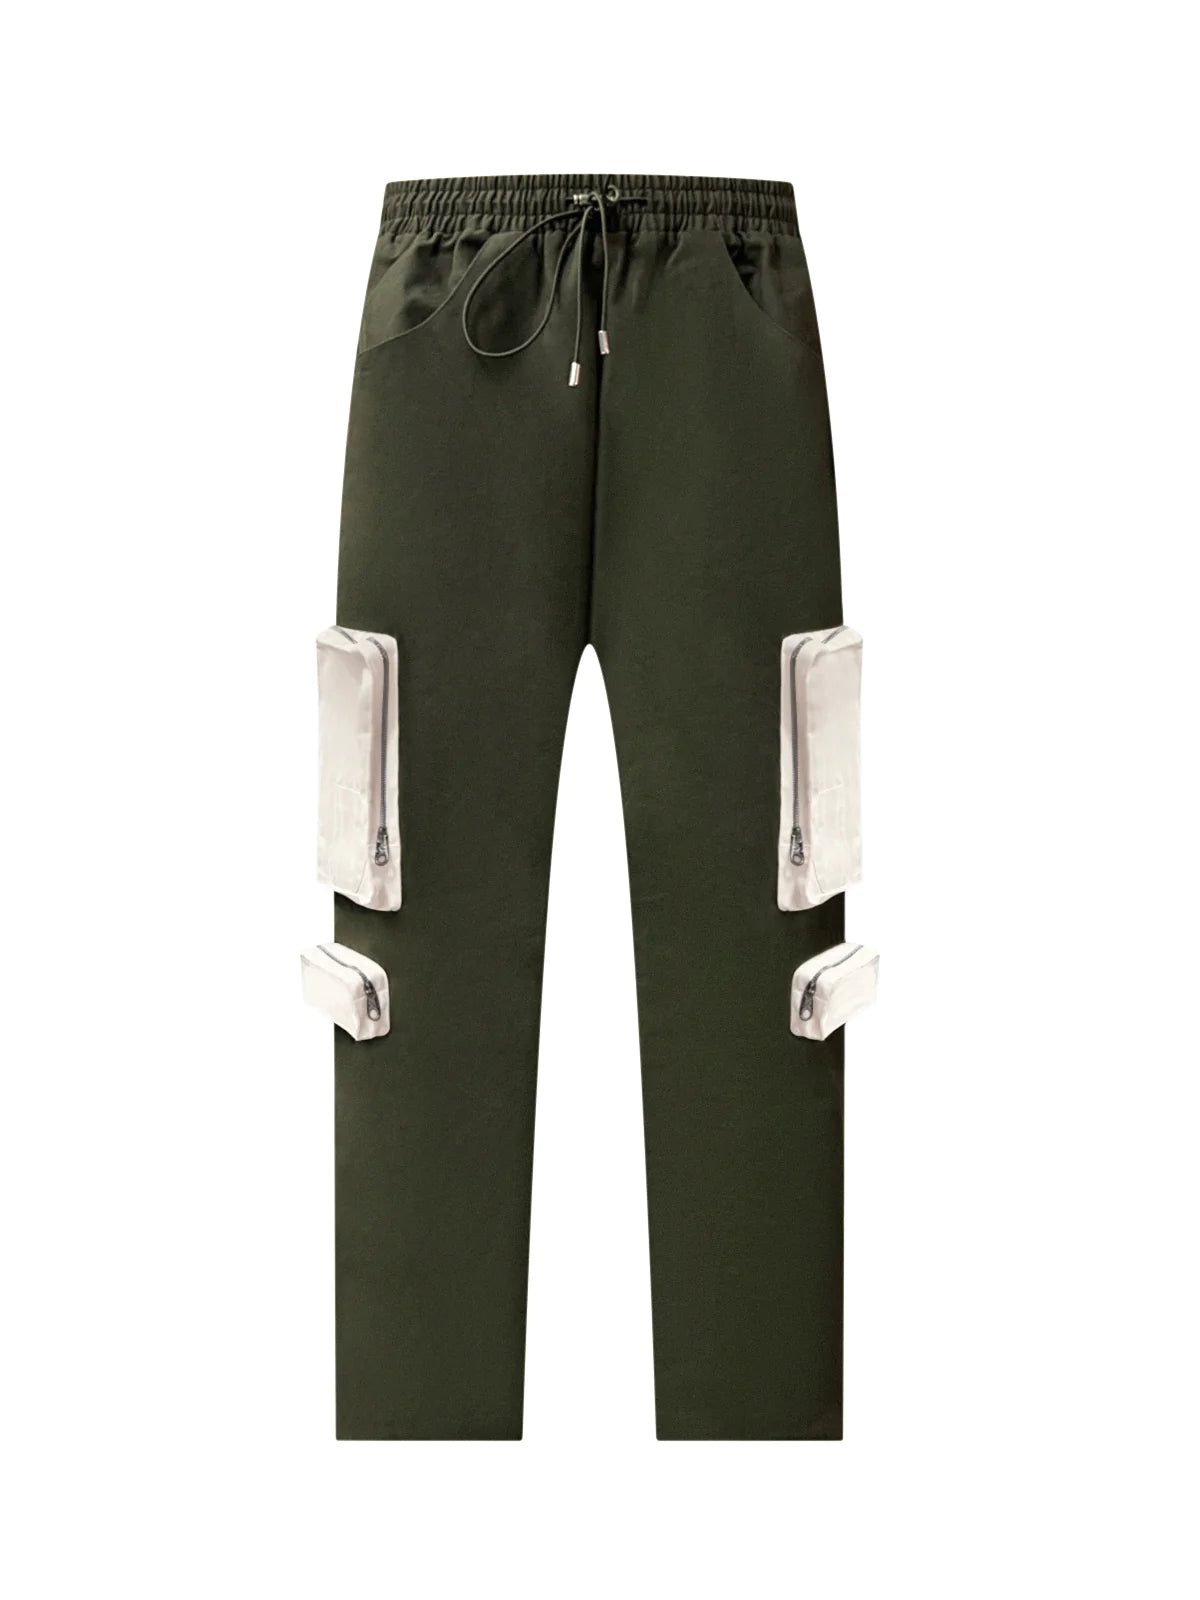 Ocean Gallery two tone cargo pants (Green/Tan)